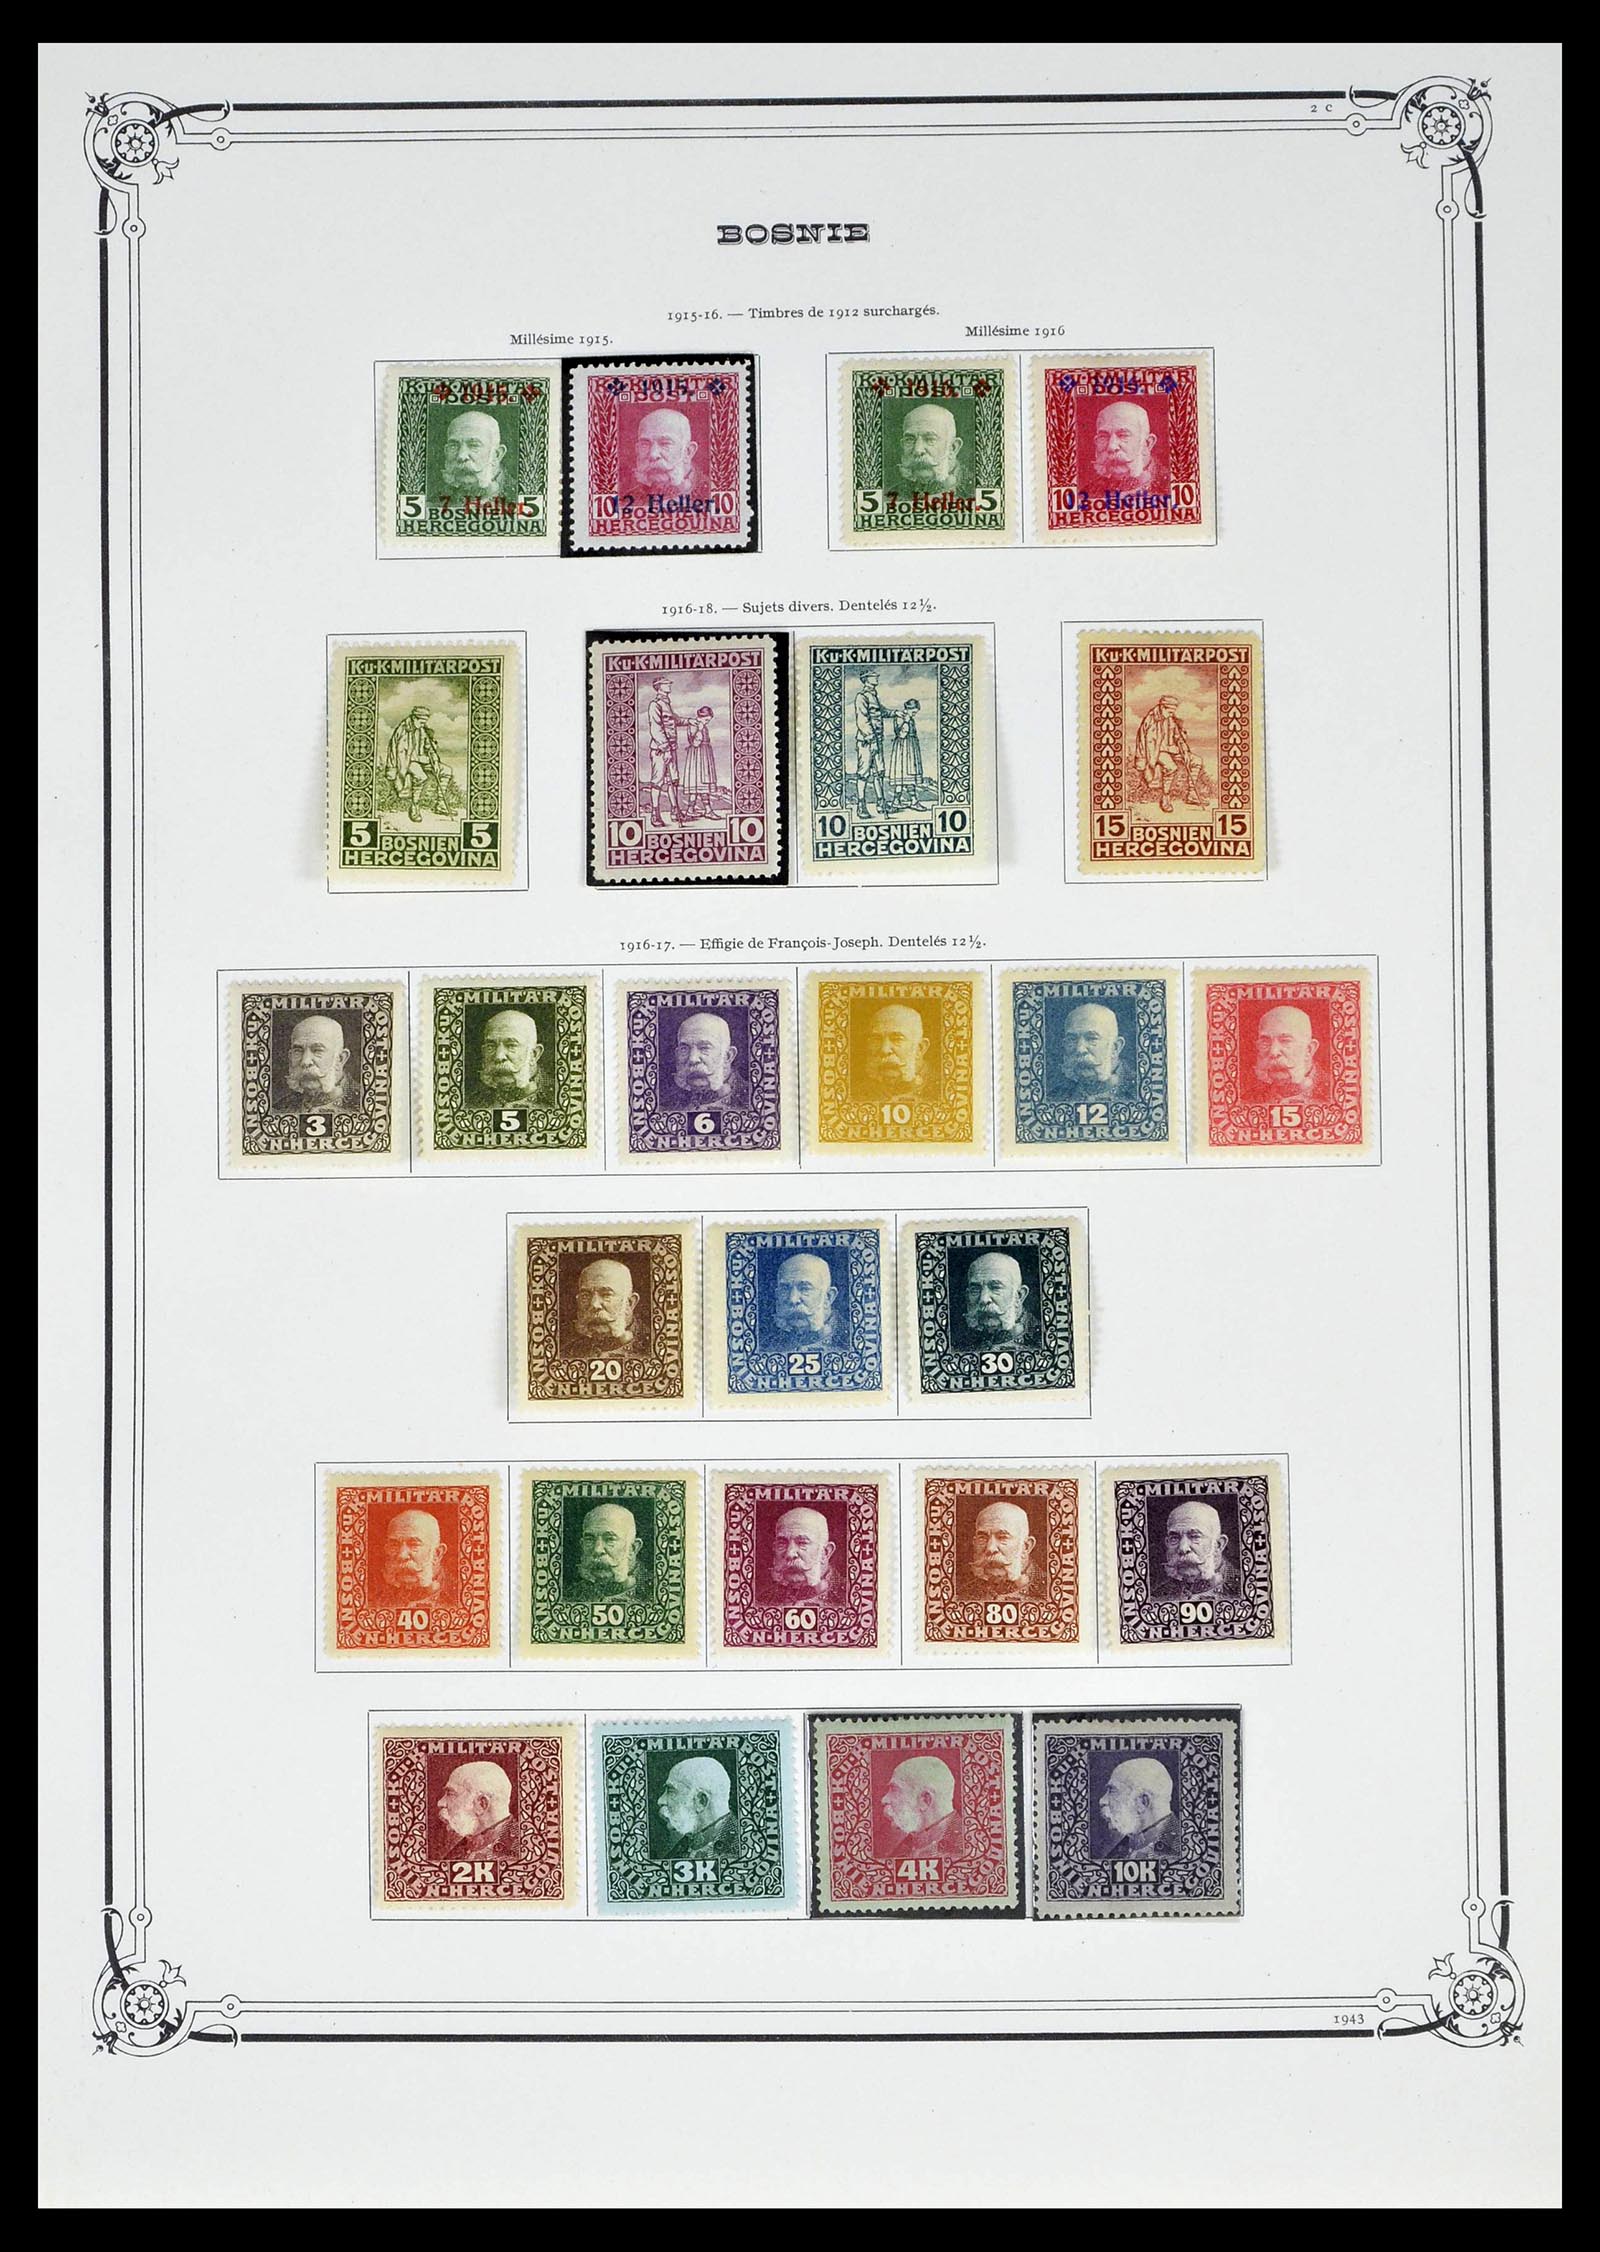 39296 0005 - Stamp collection 39296 Bosnia Herzegovina 1879-1918.